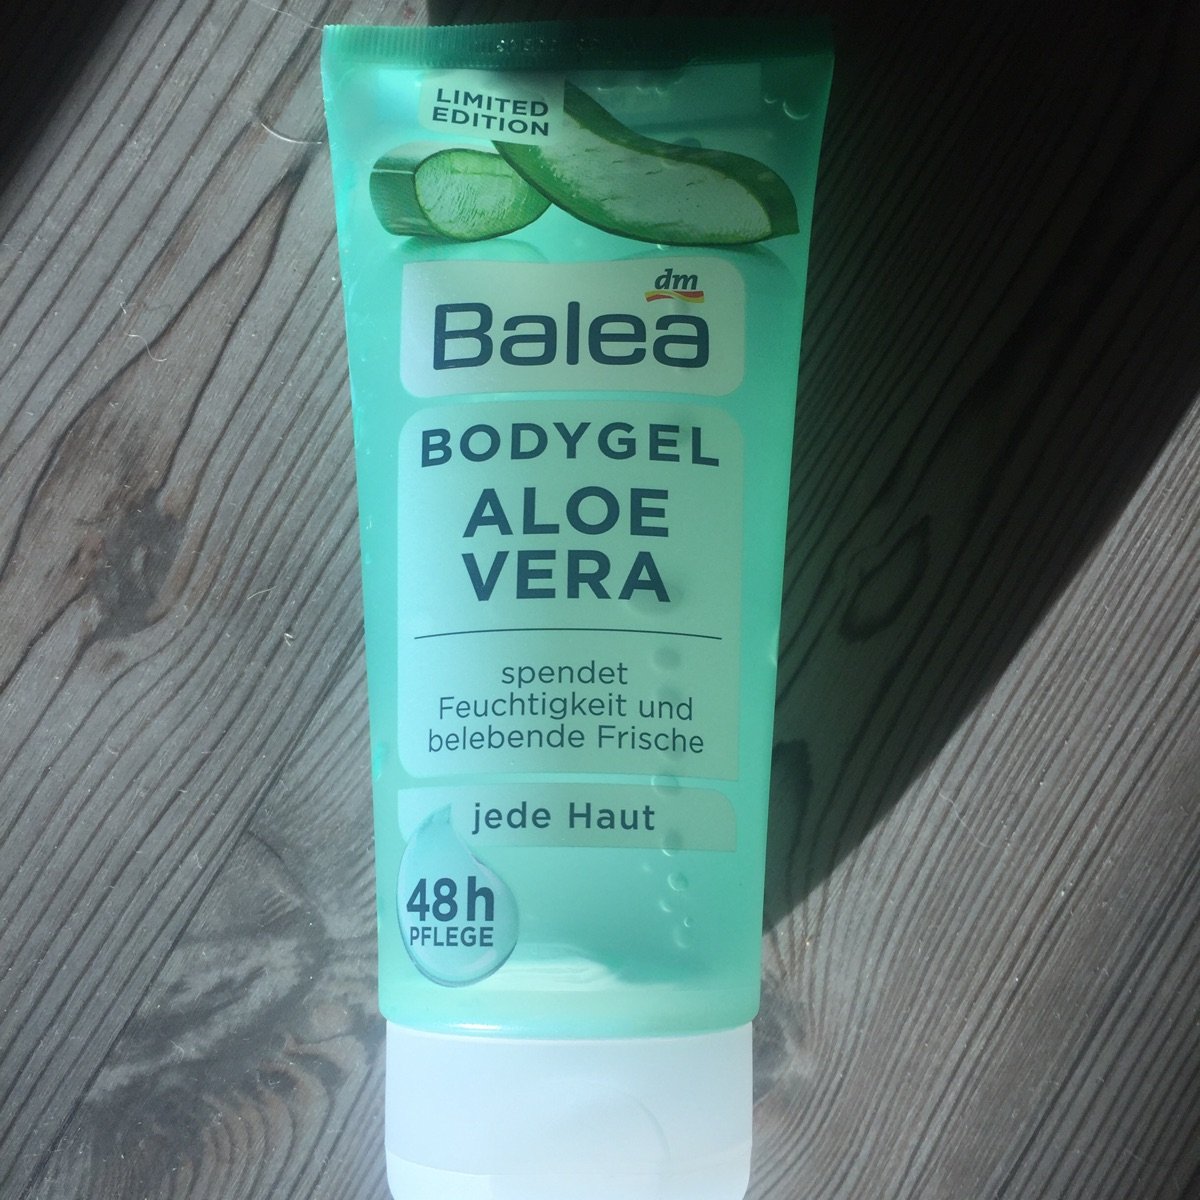 Balea Bodygel Aloe Vera Reviews | abillion